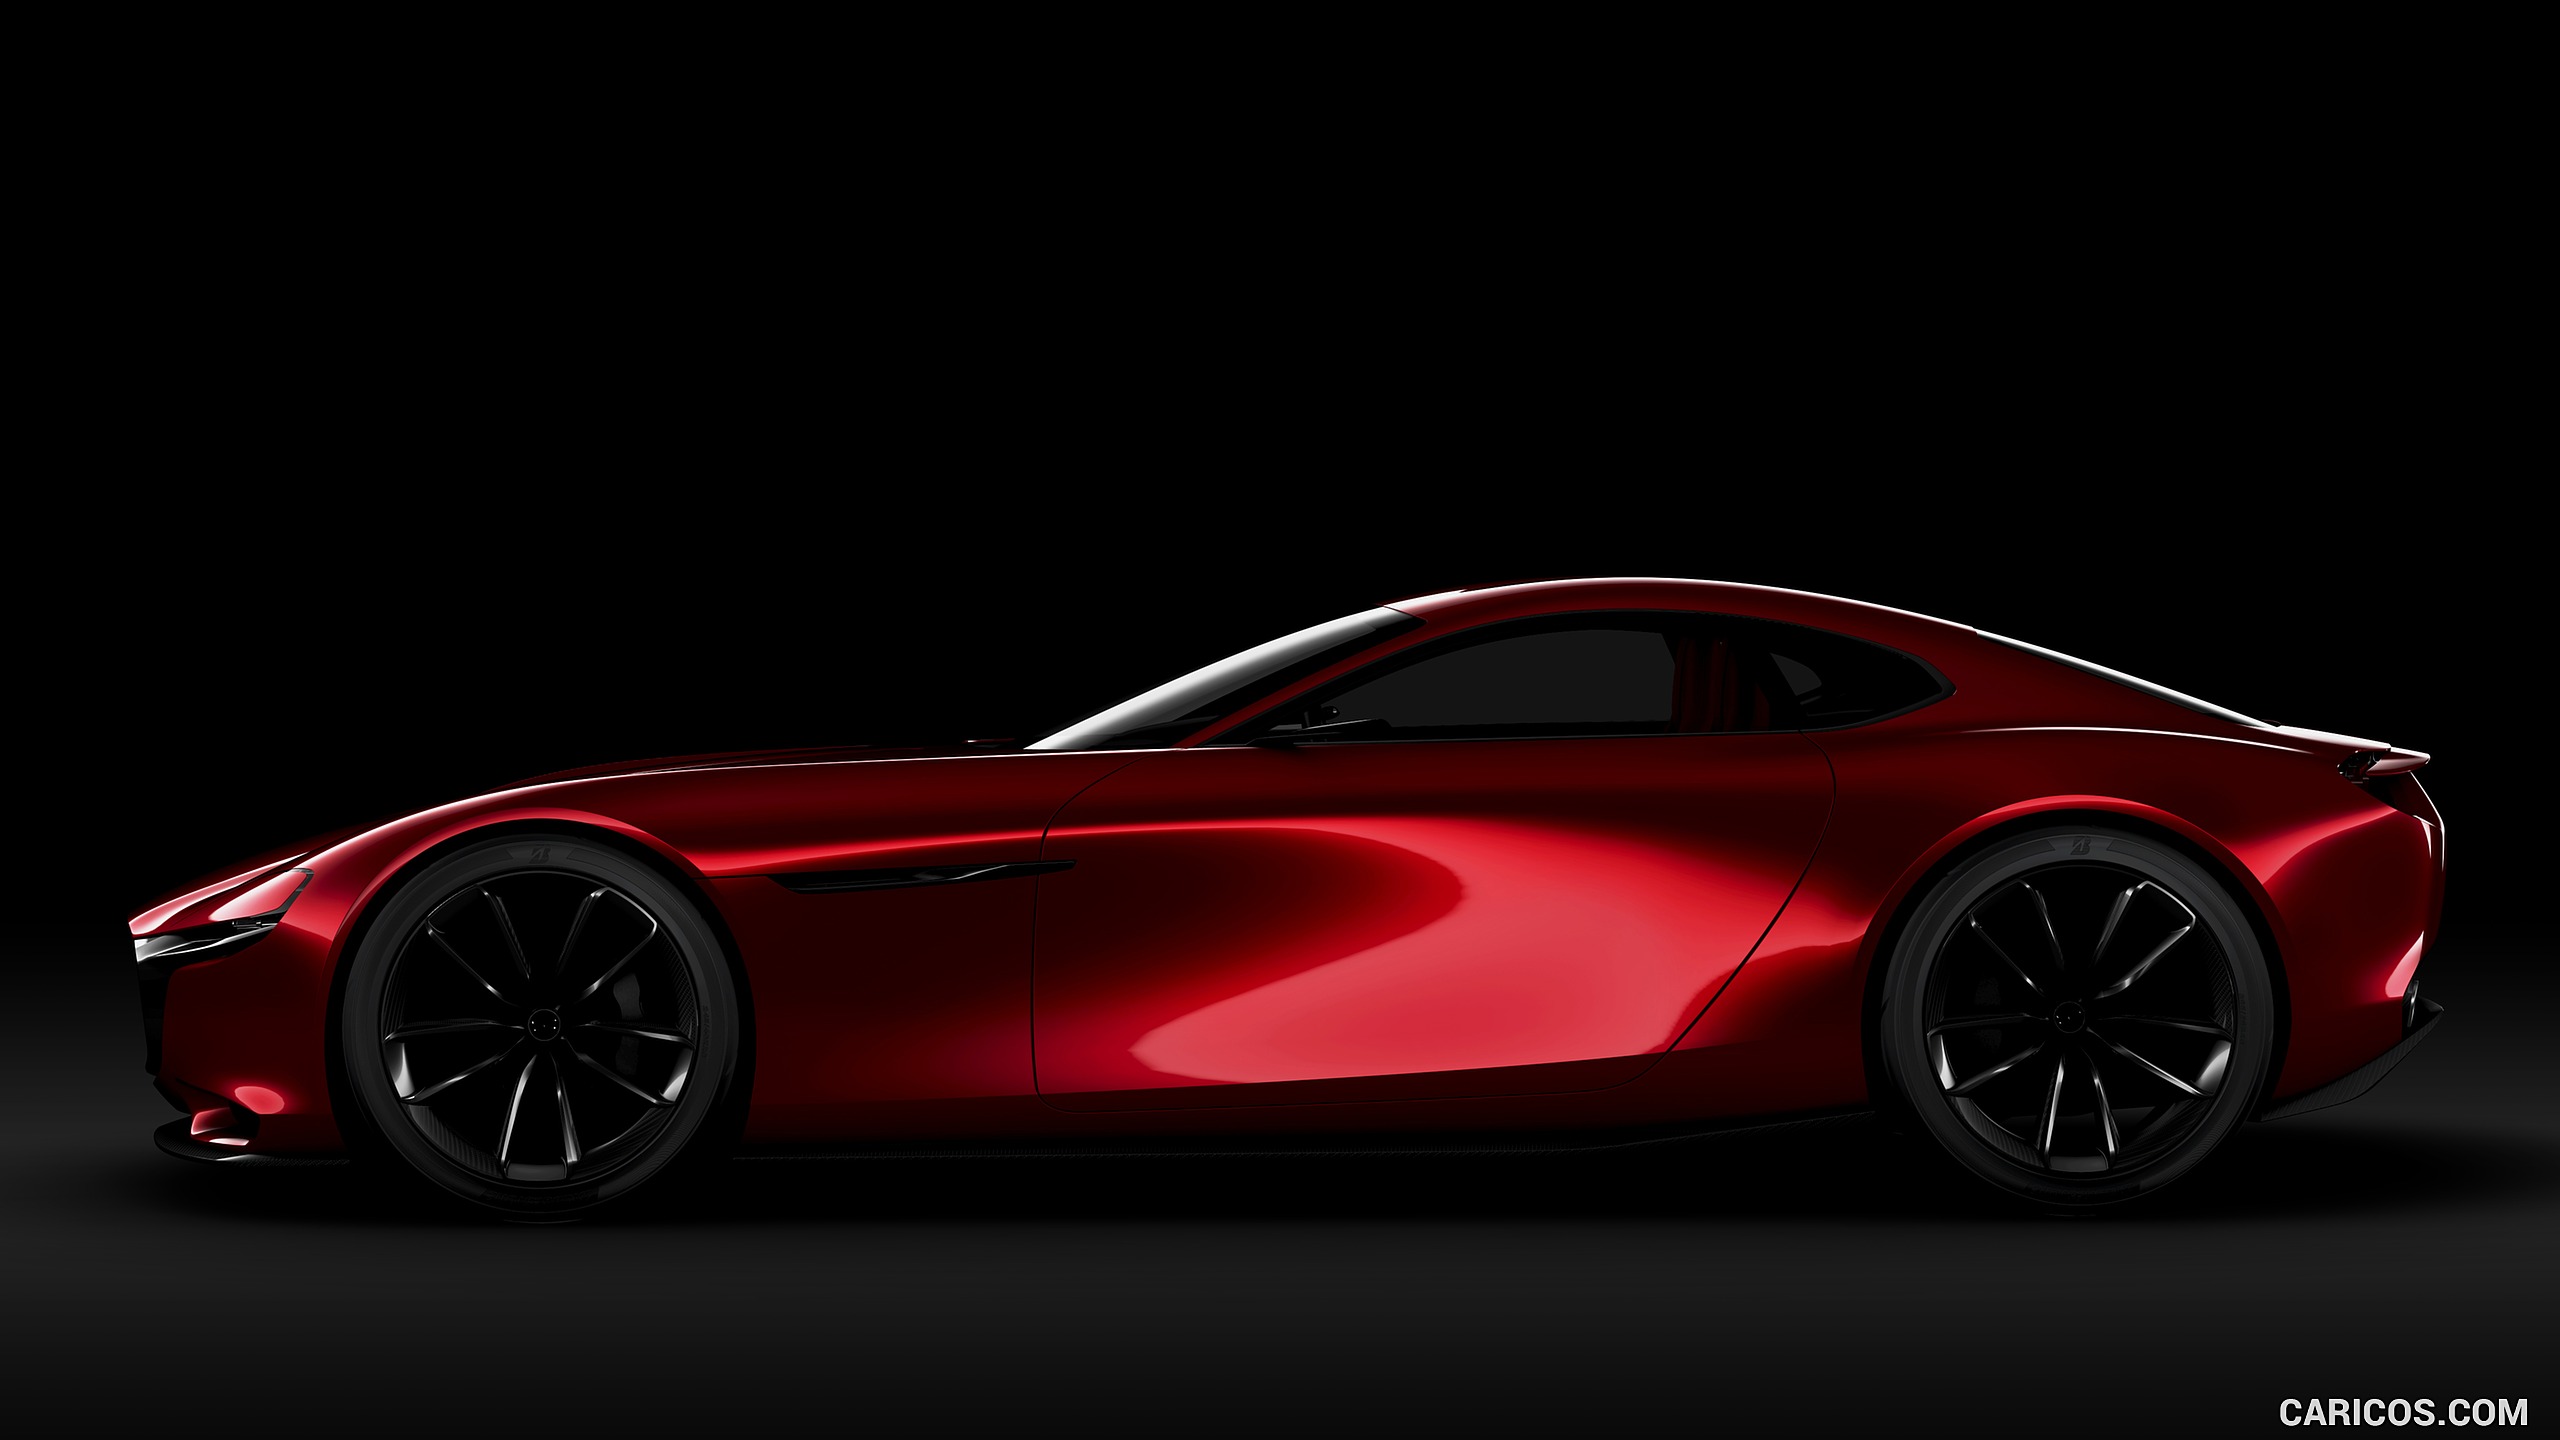 2015 Mazda RX-VISION Concept - Side, #7 of 16